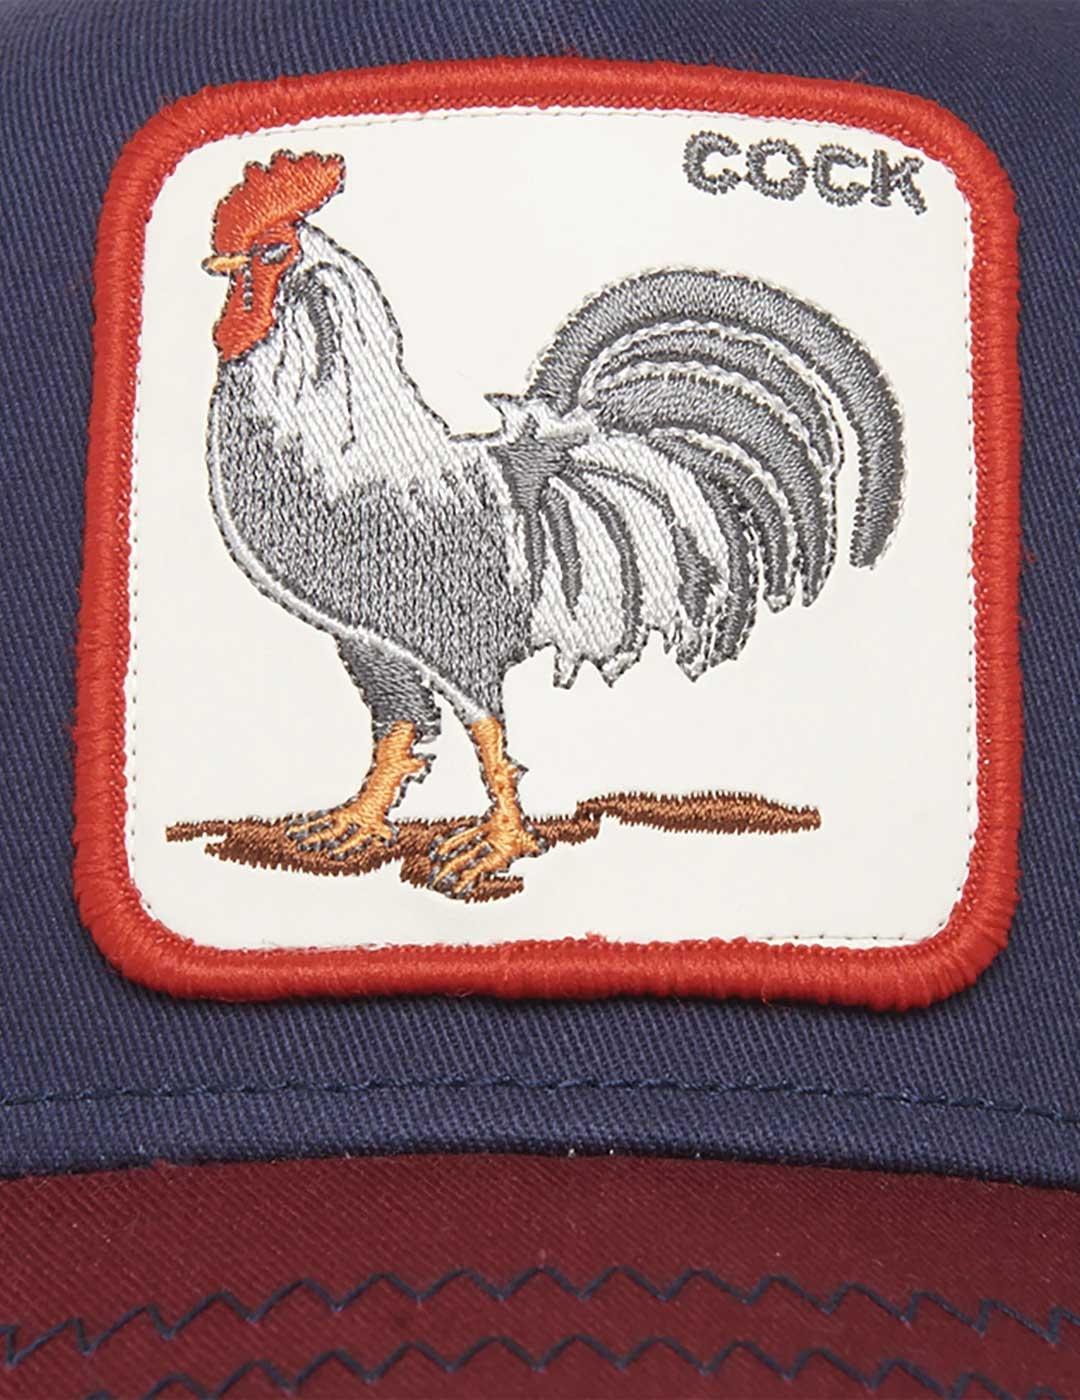 Goorin Bros All American Rooster 100 Gorra multicolor unisex